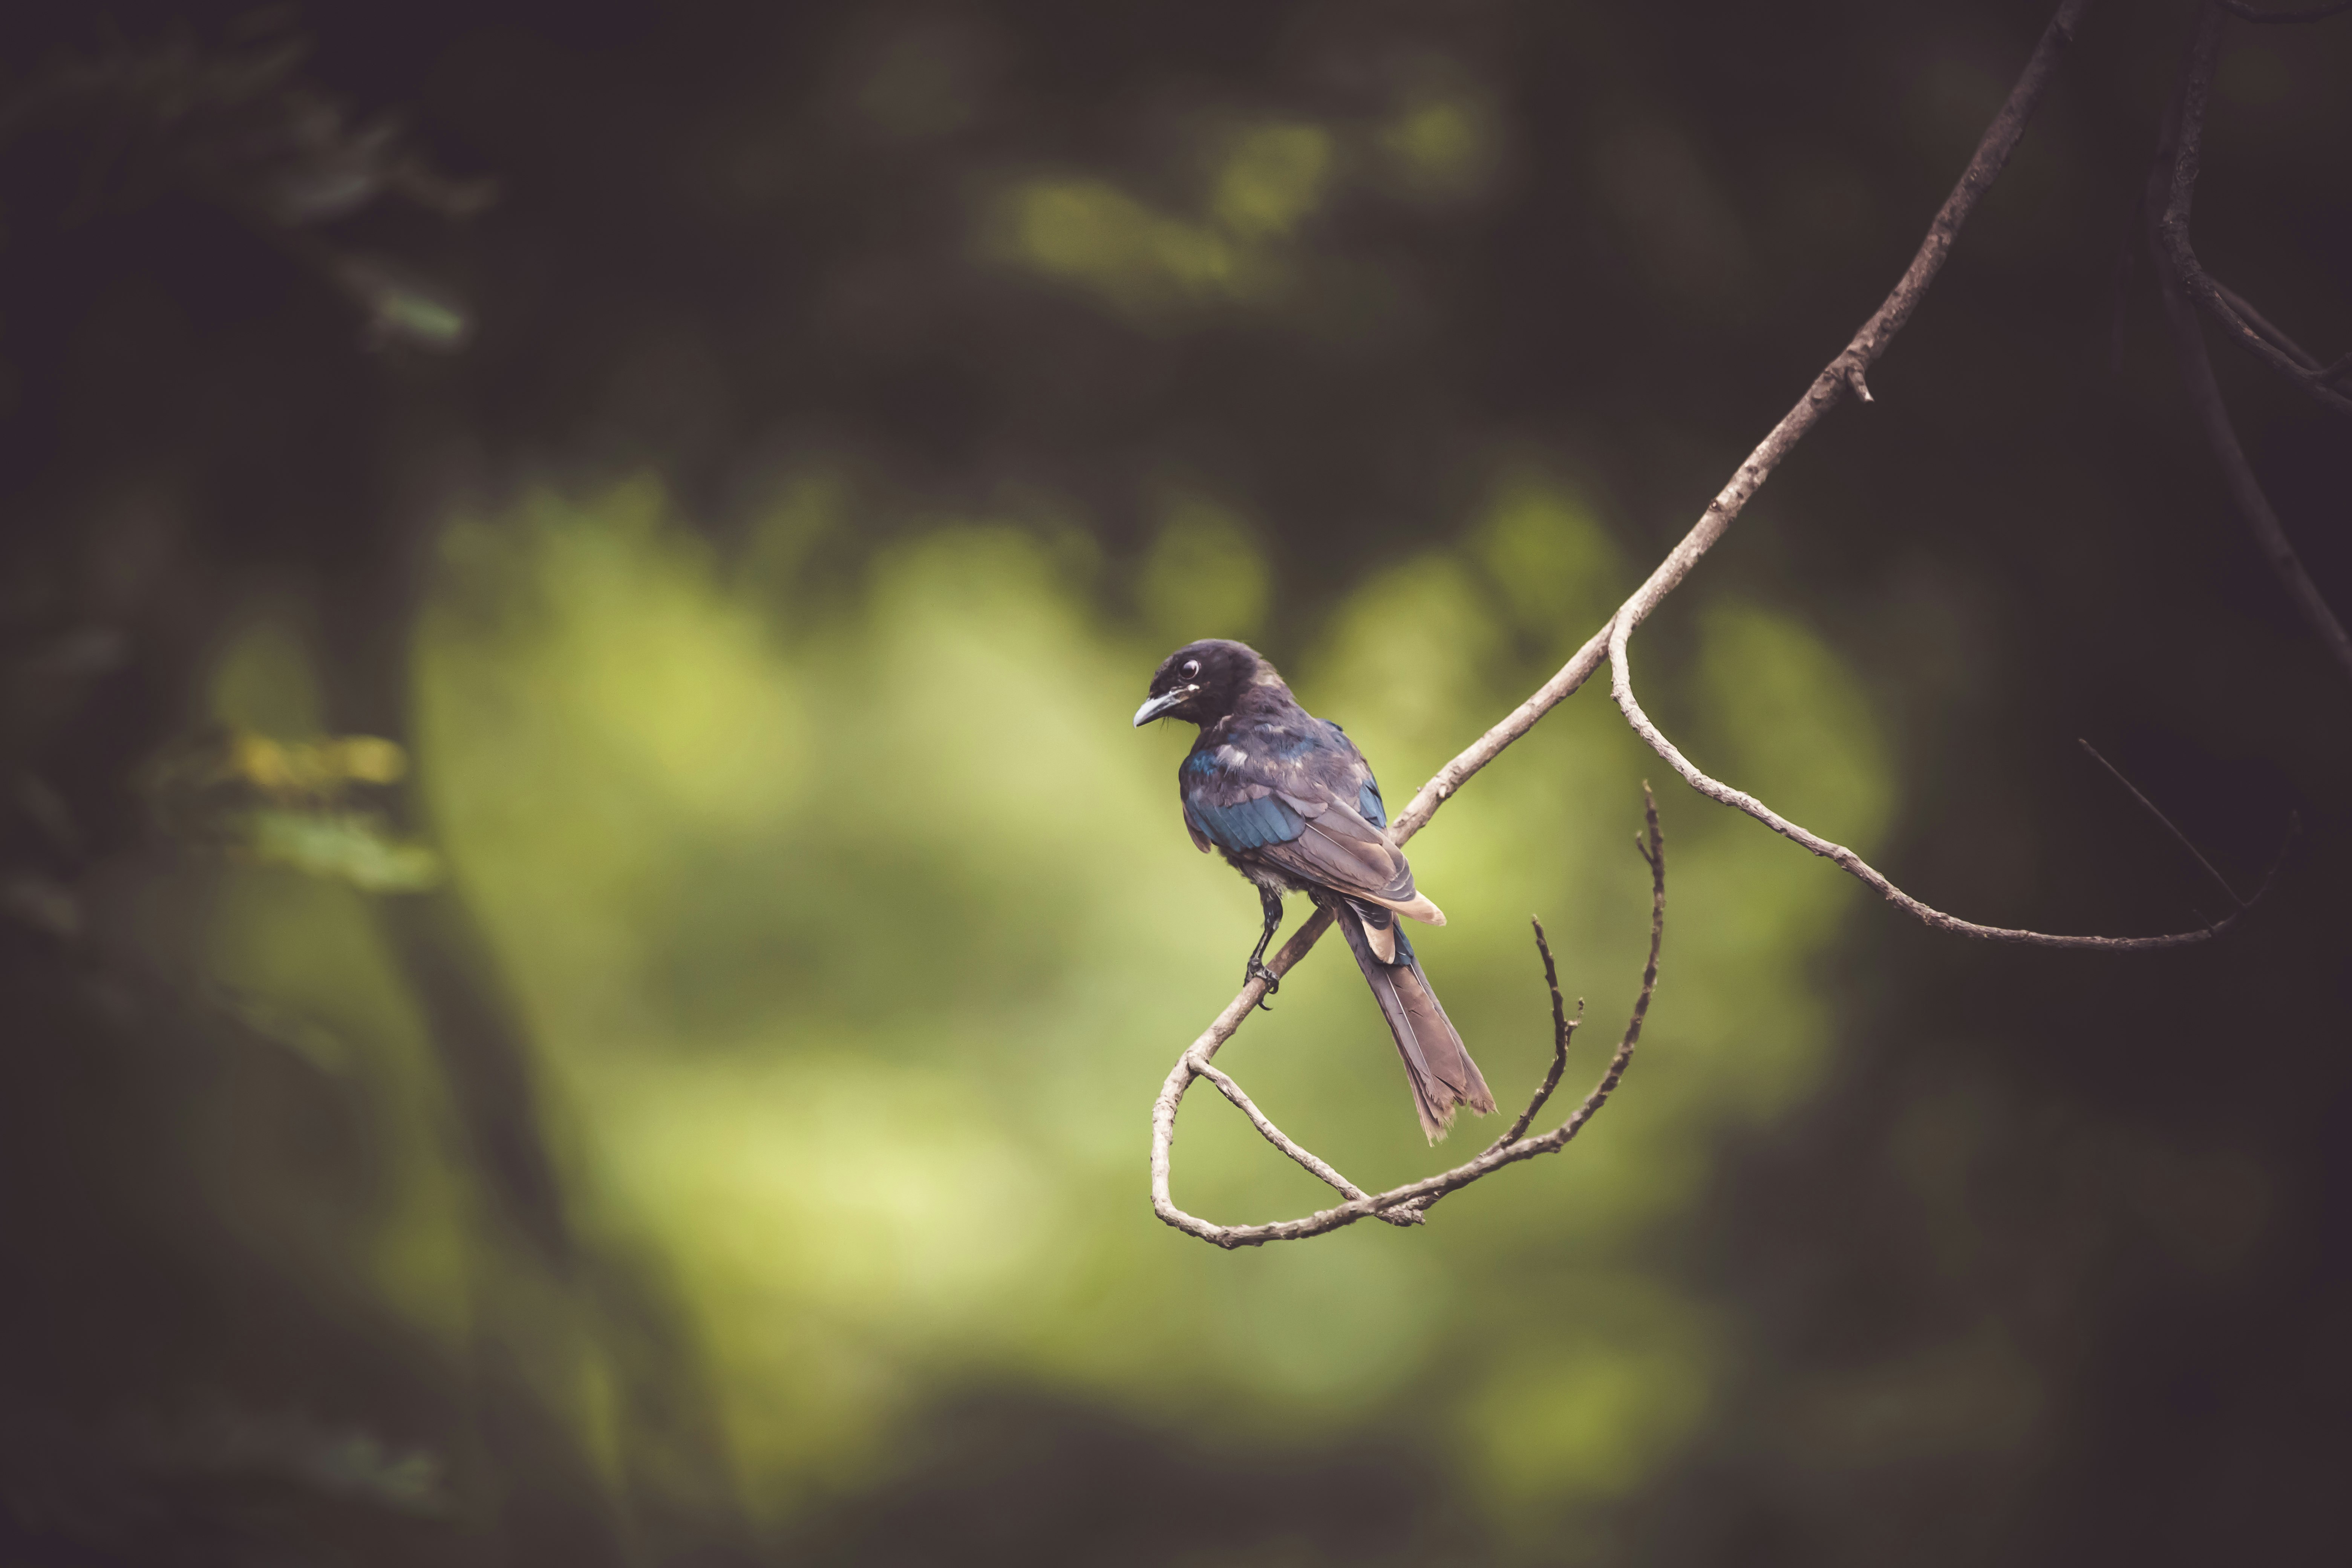 blue bird on brown tree branch